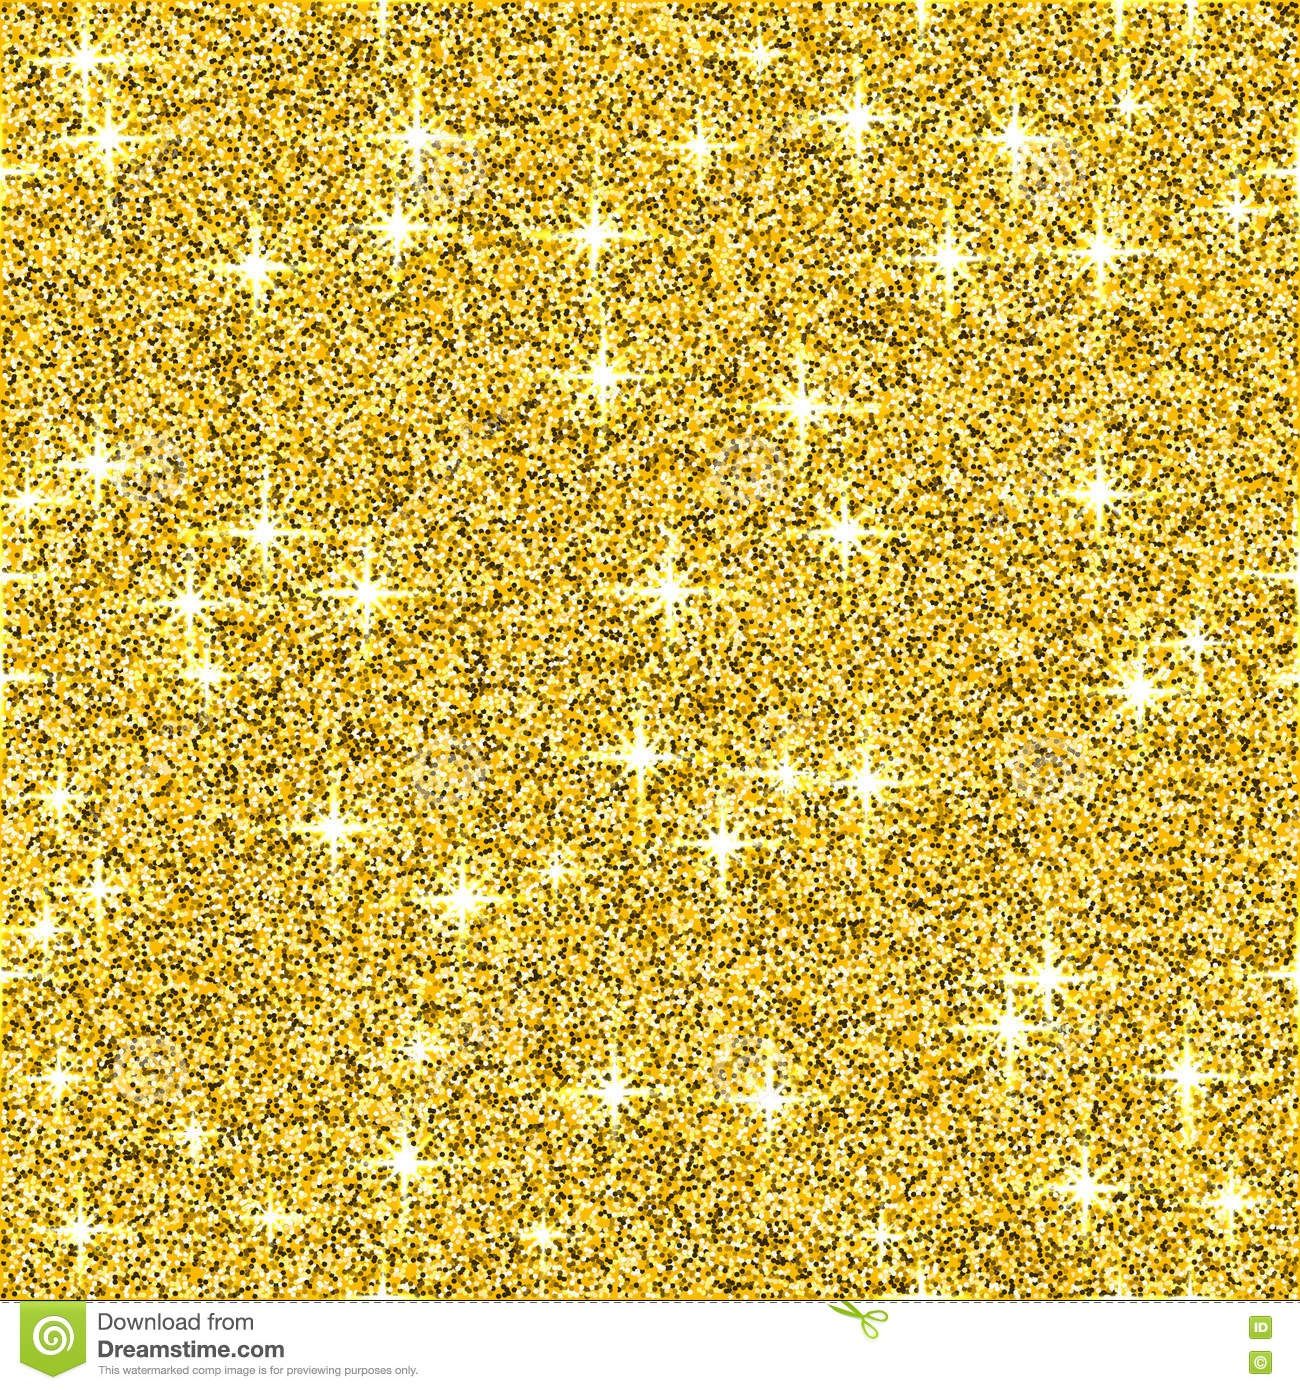 Black and Yellow Glitter Wallpaper